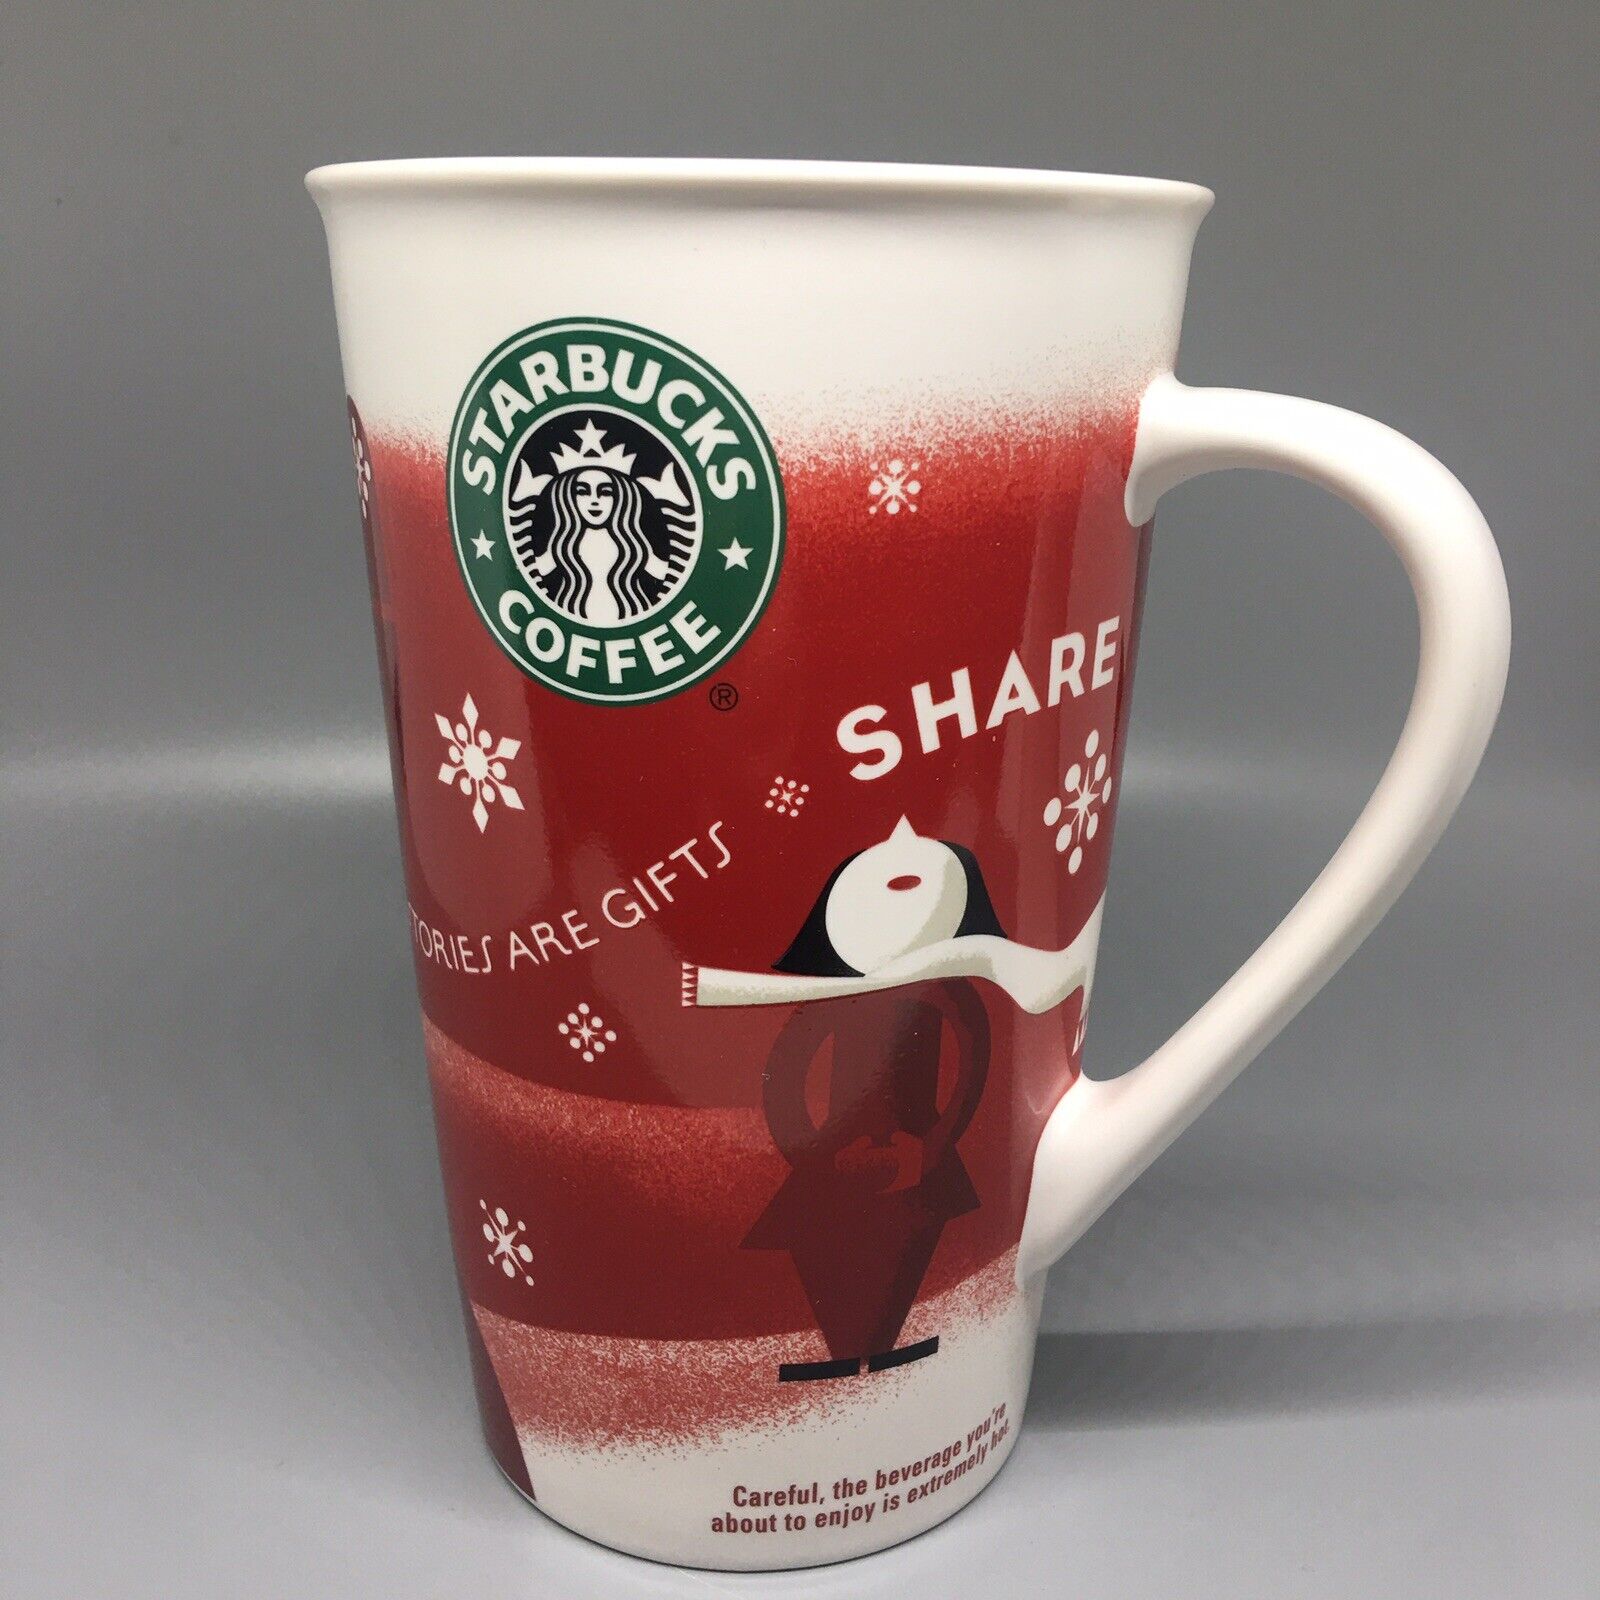 2010 Starbucks Holiday Coffee Mug “Stories Are Gifts”